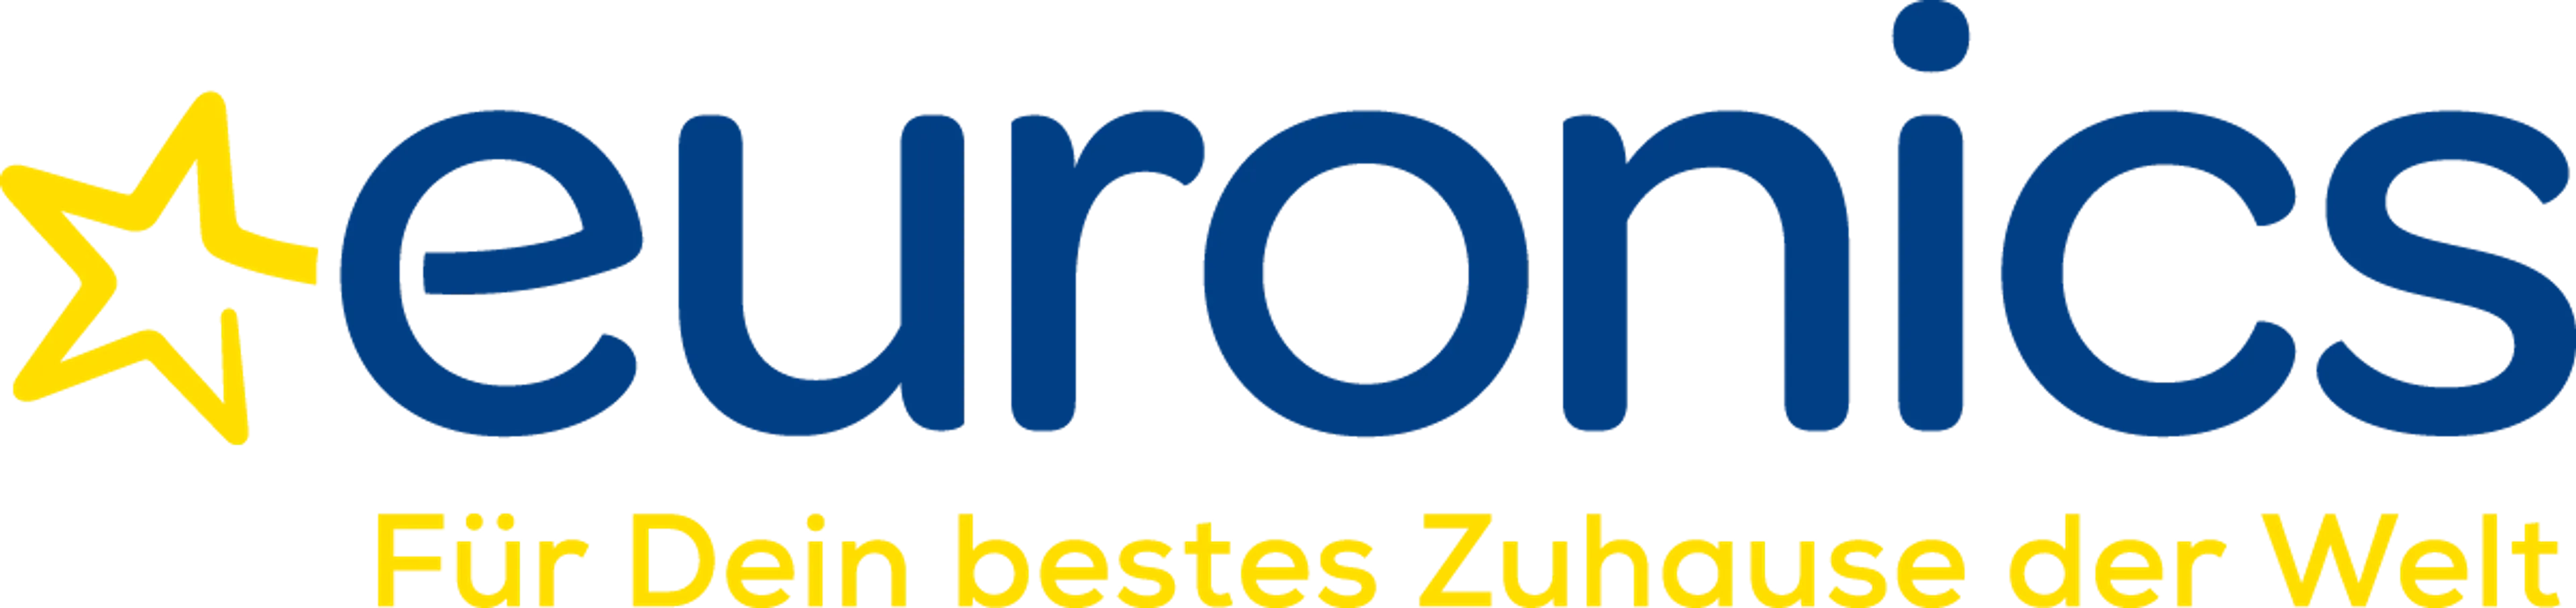 EURONICS XXL logo